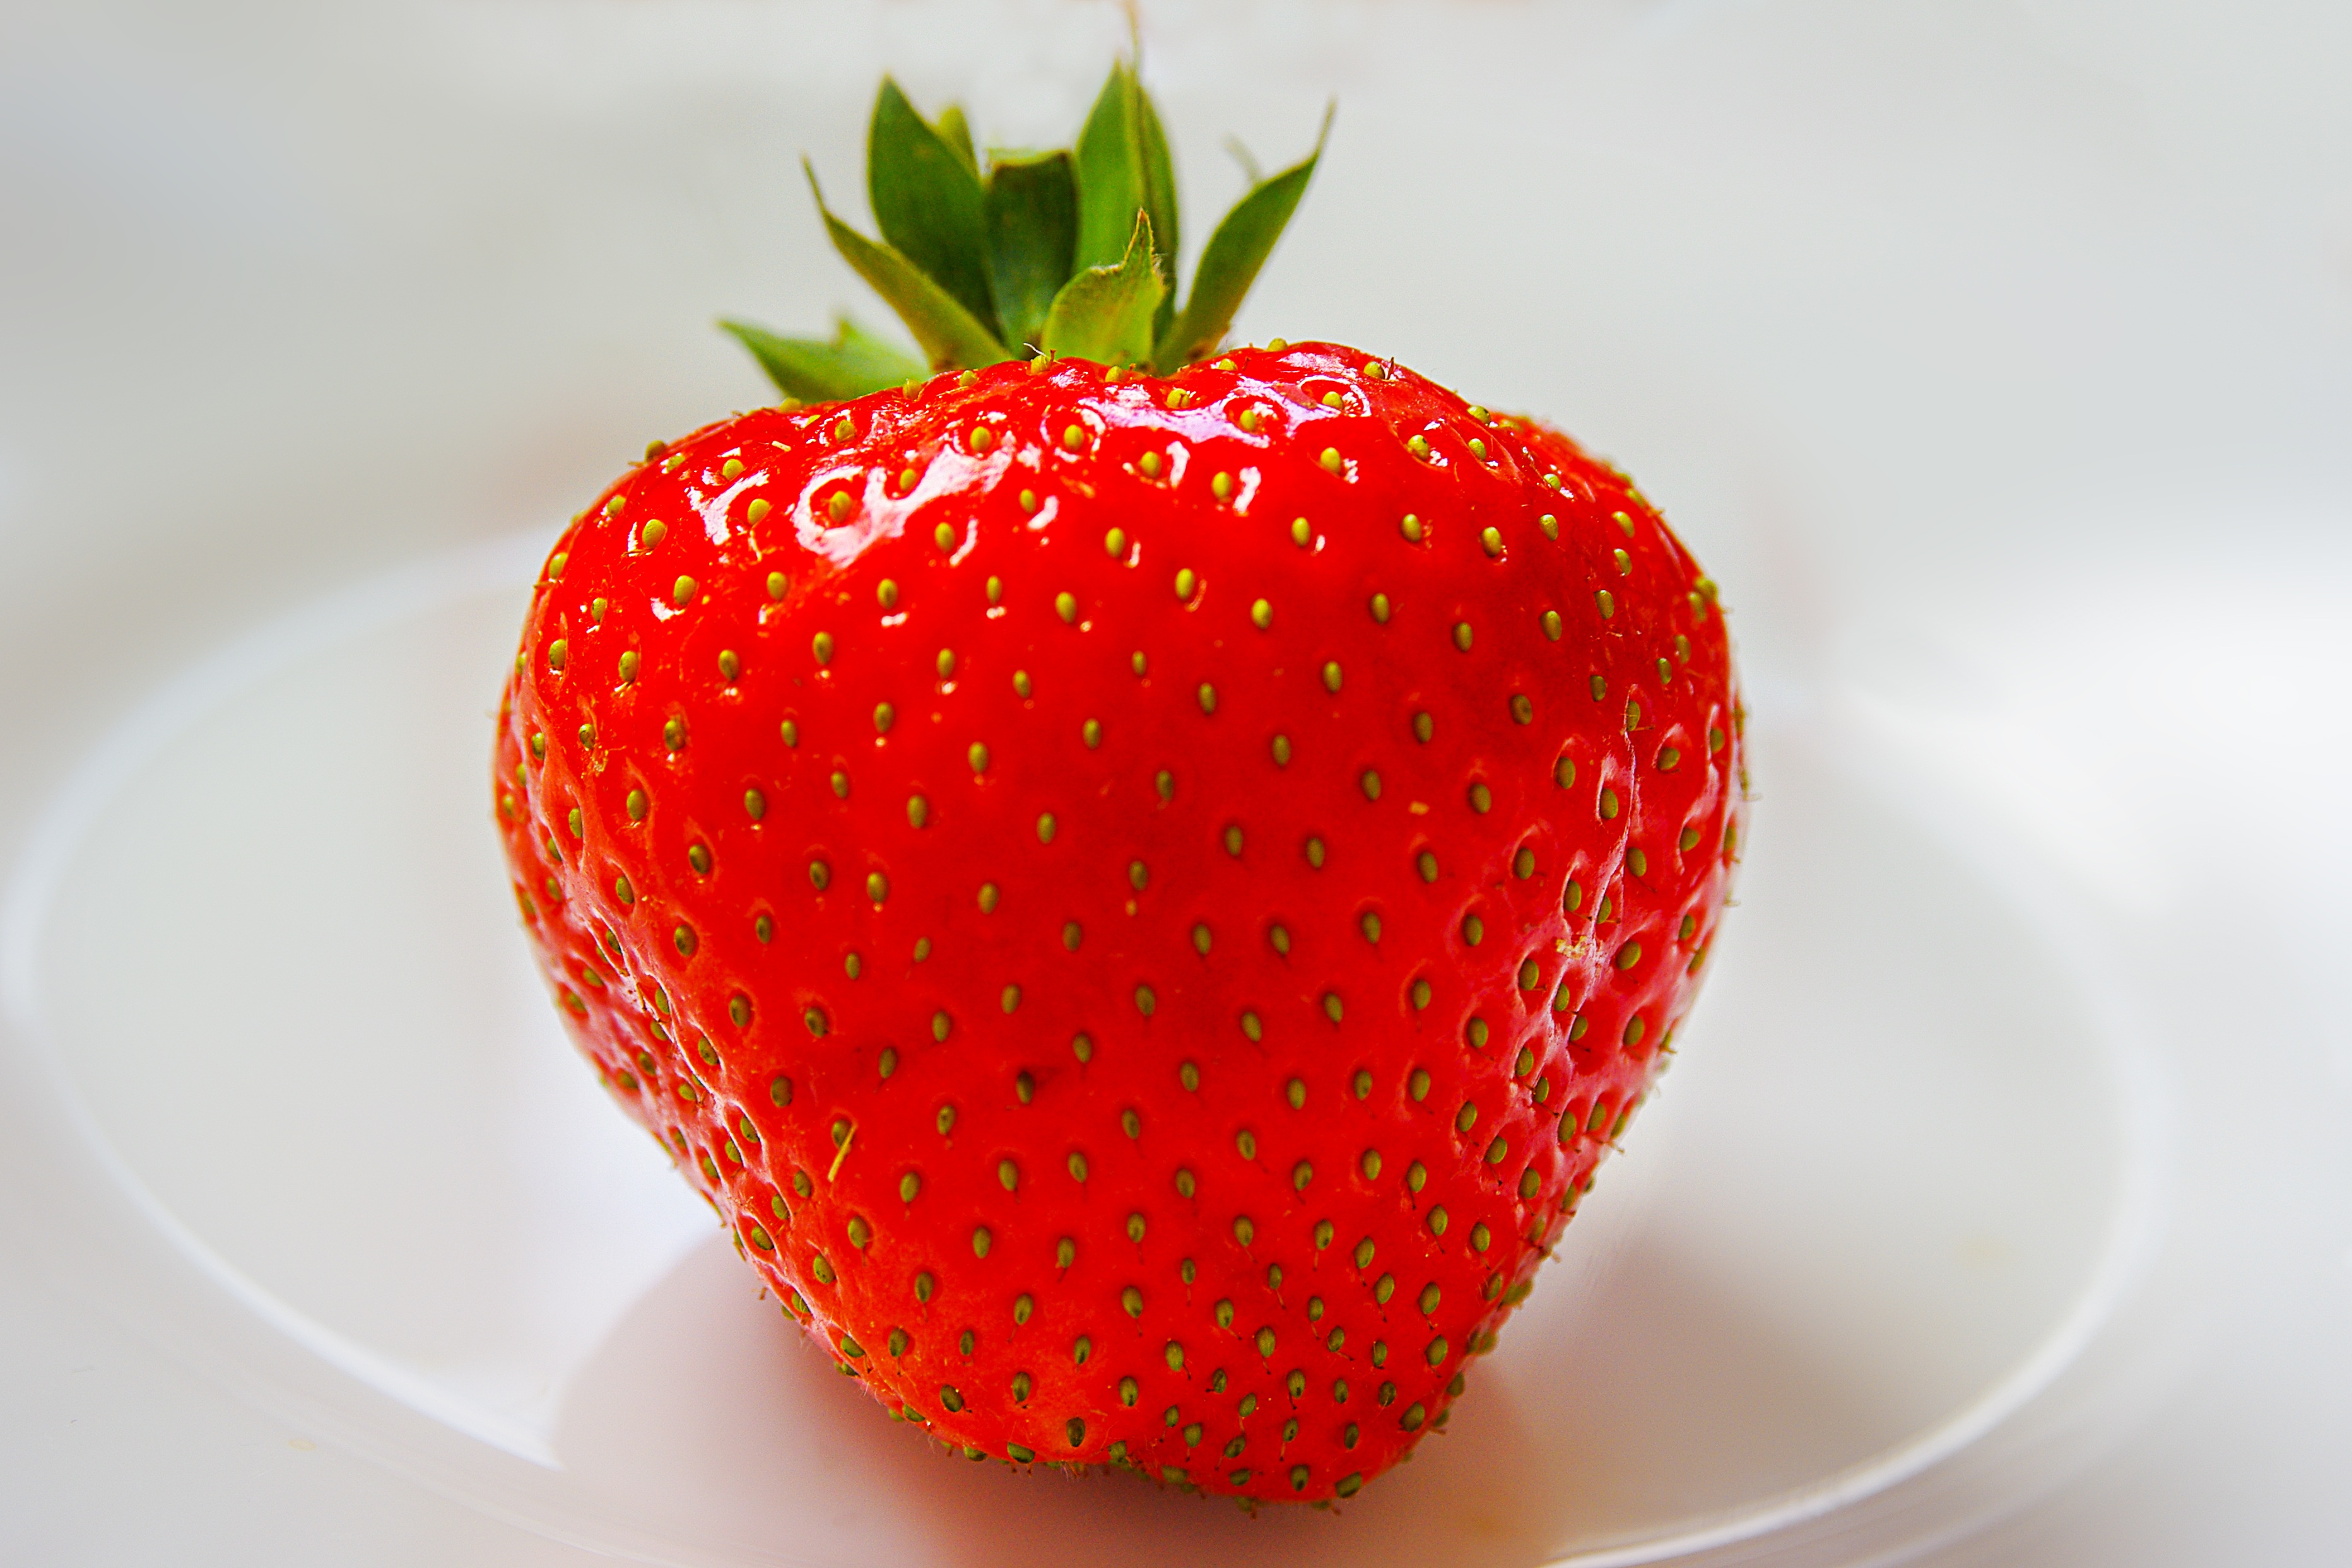 N24: 8 ягод клубники в день оздоравливают сердце